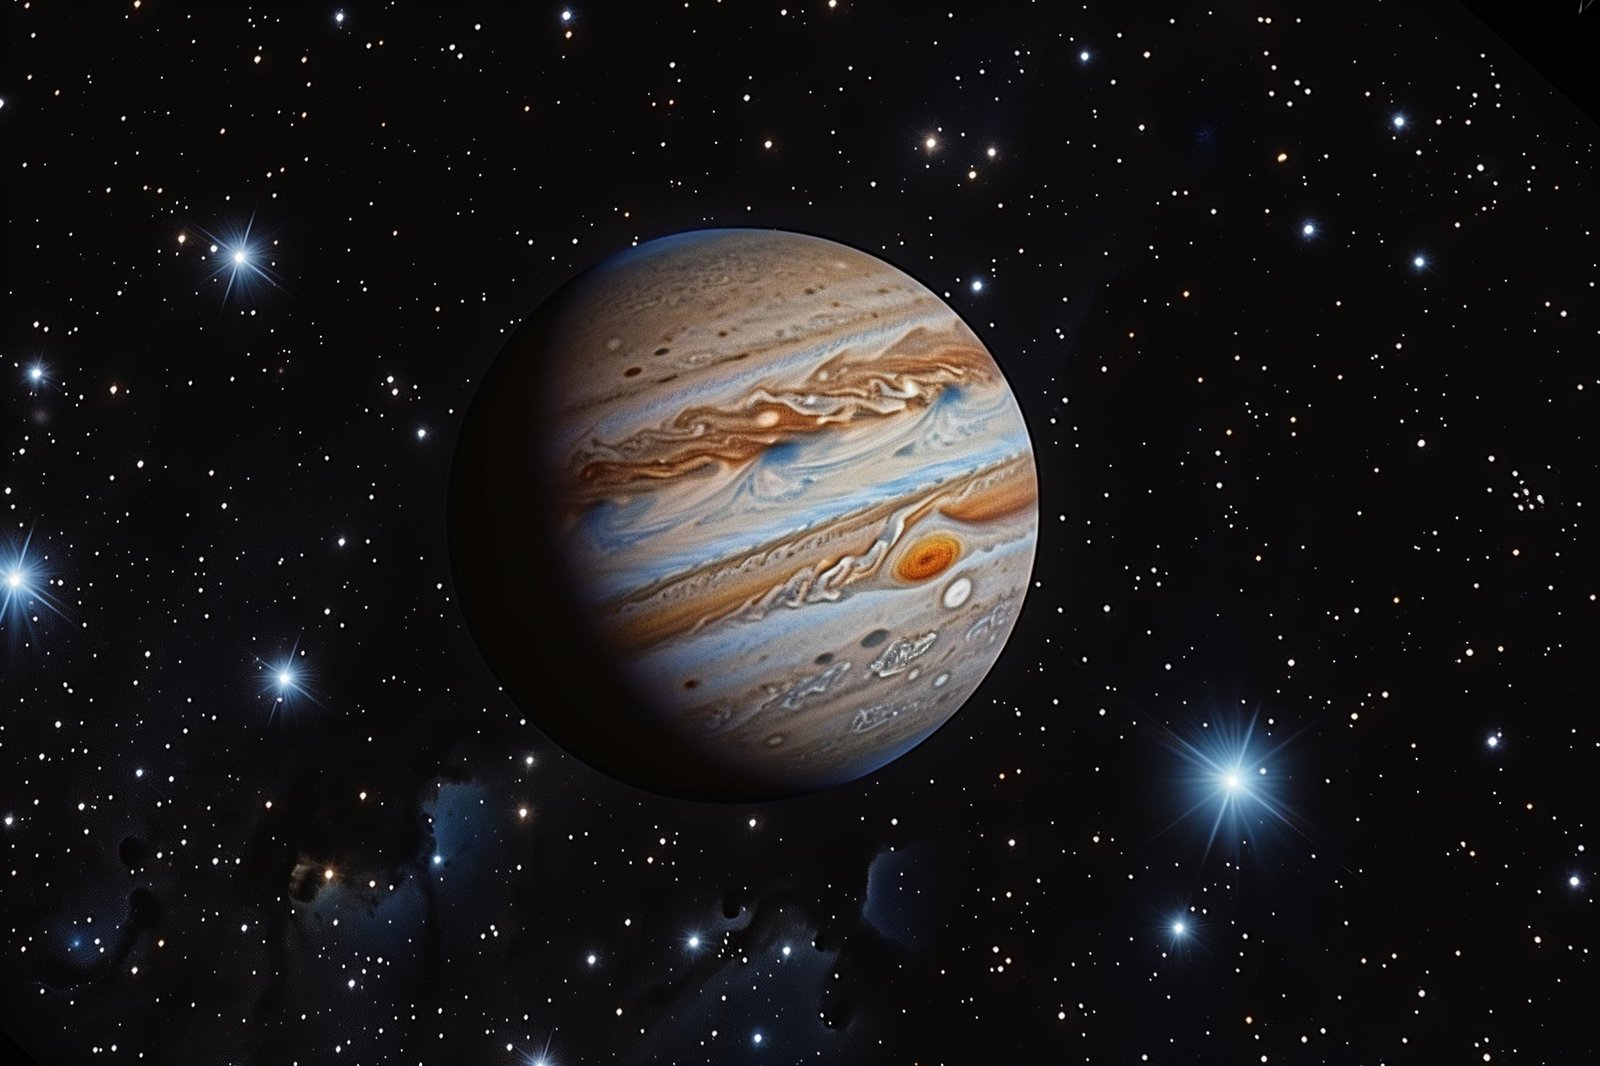 Jupiter Plows Through the Pleiades